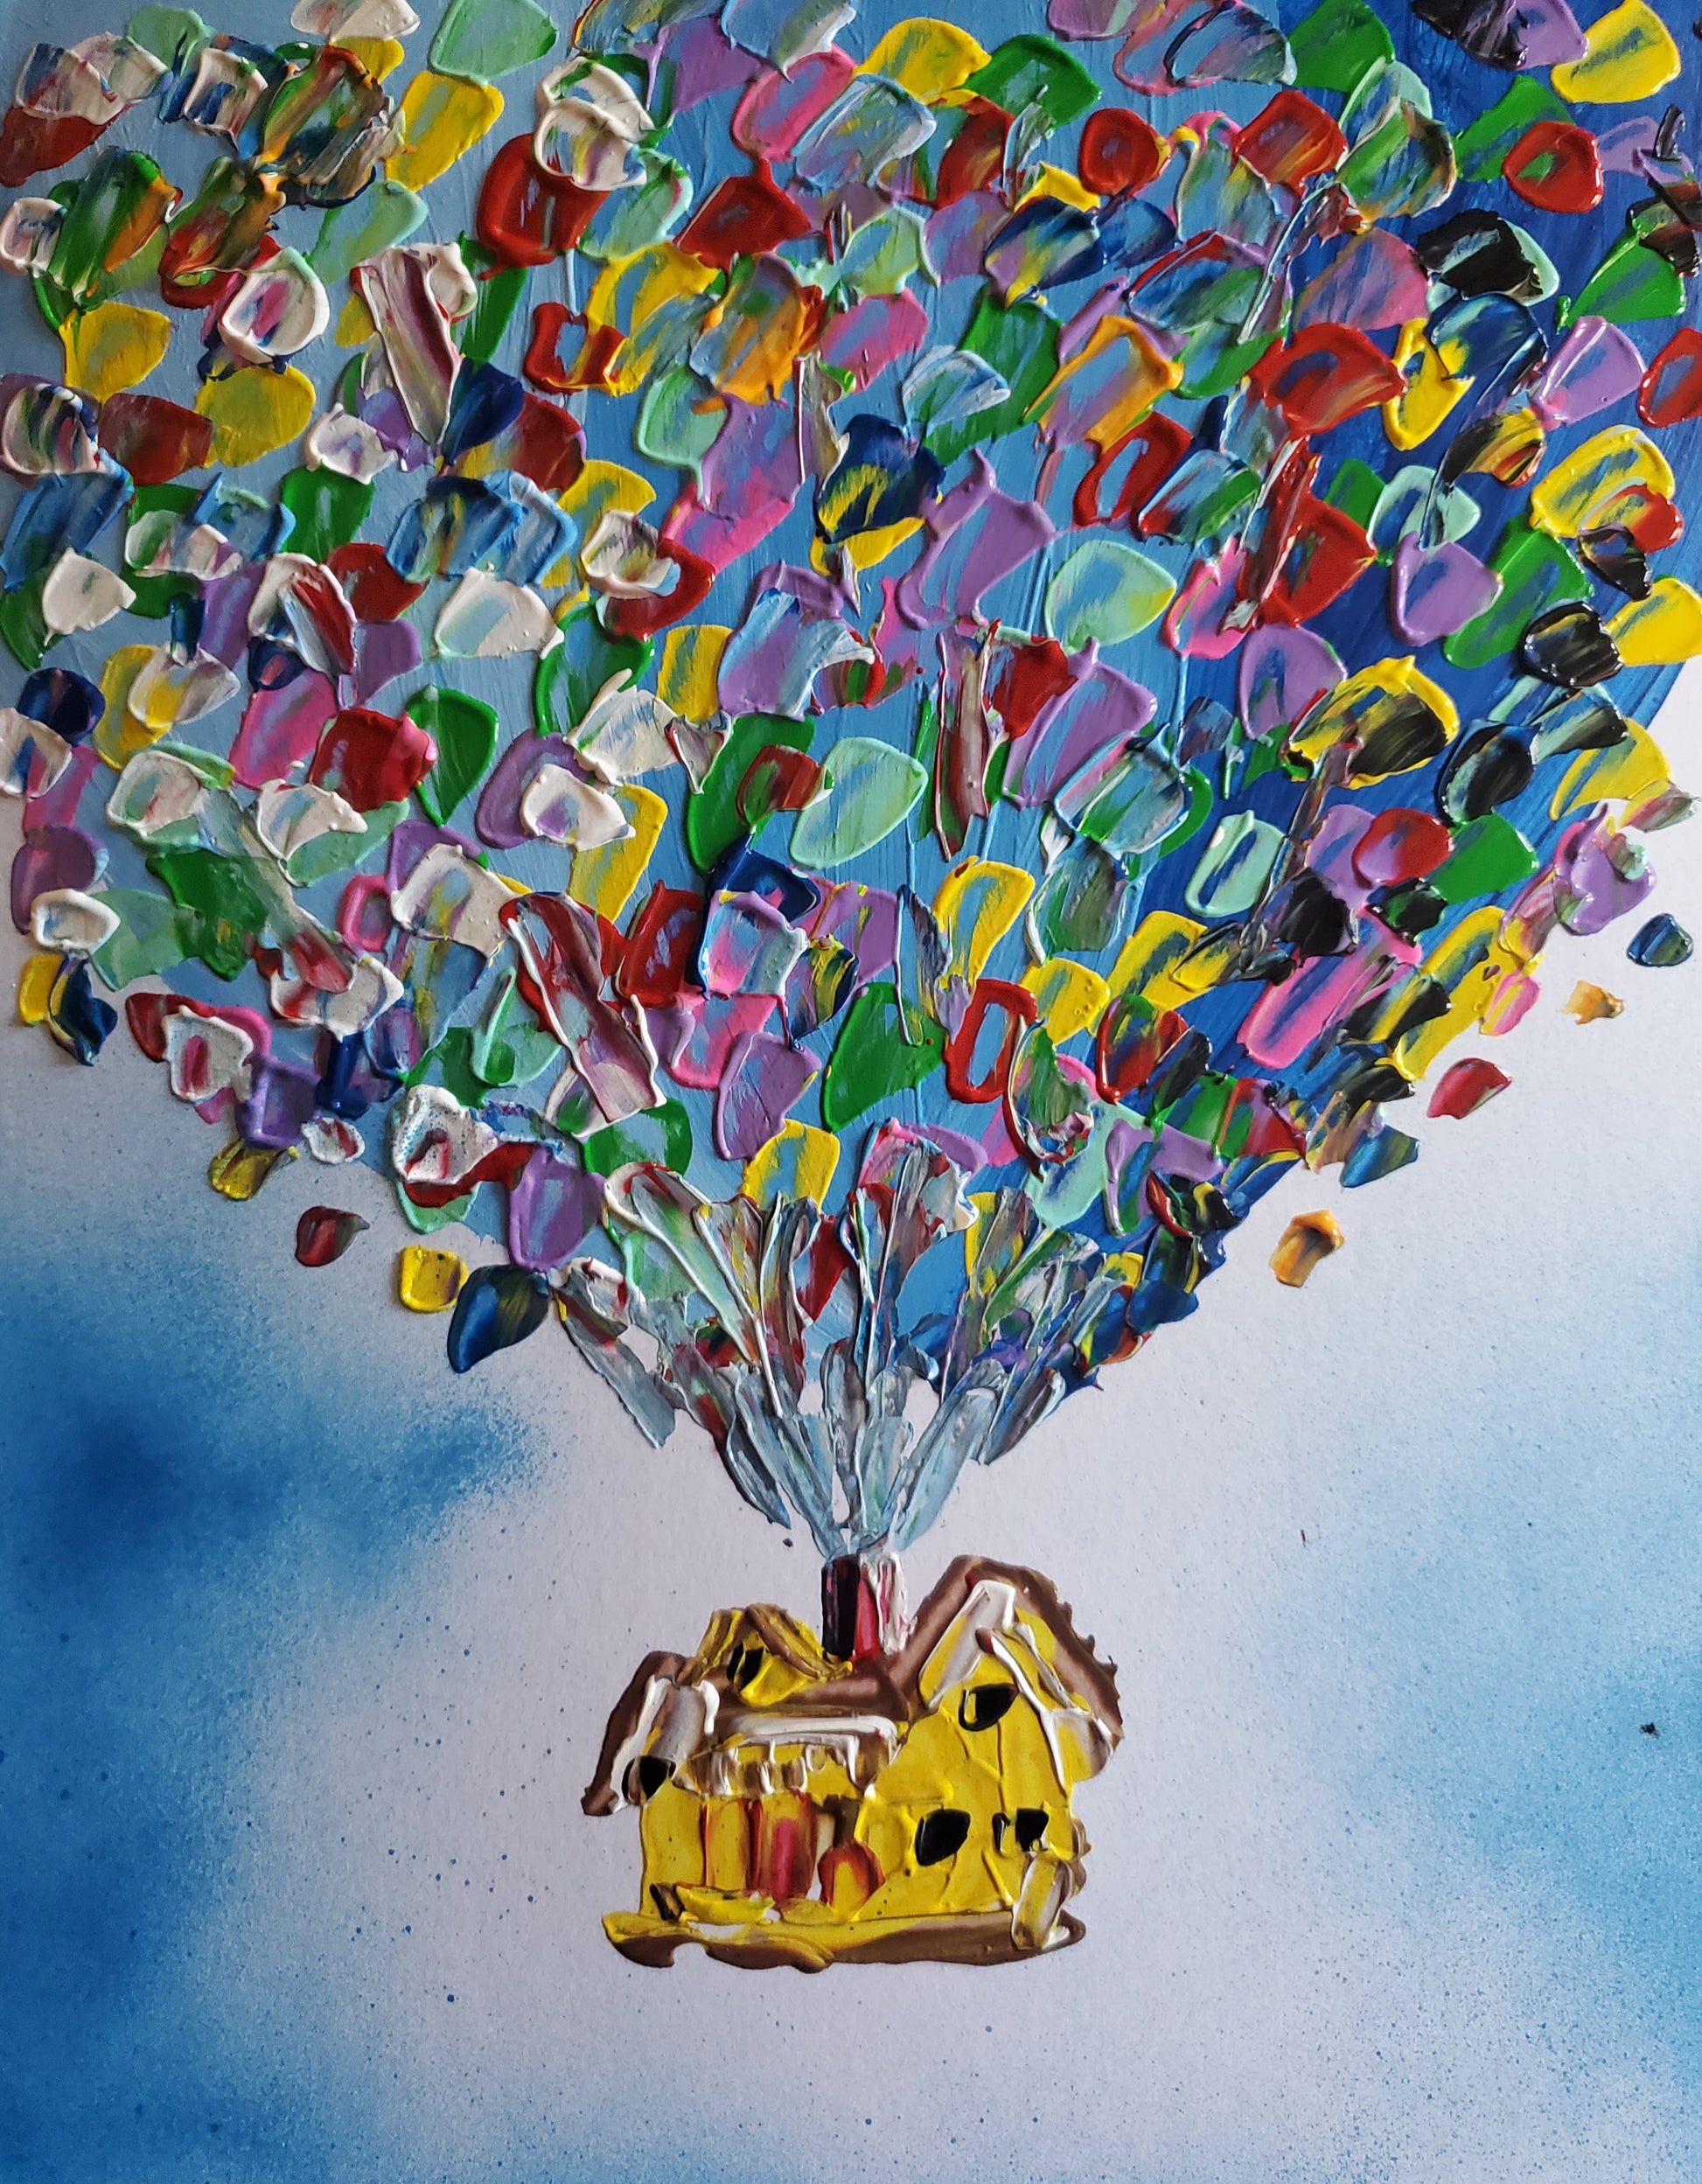 up house balloons pixar